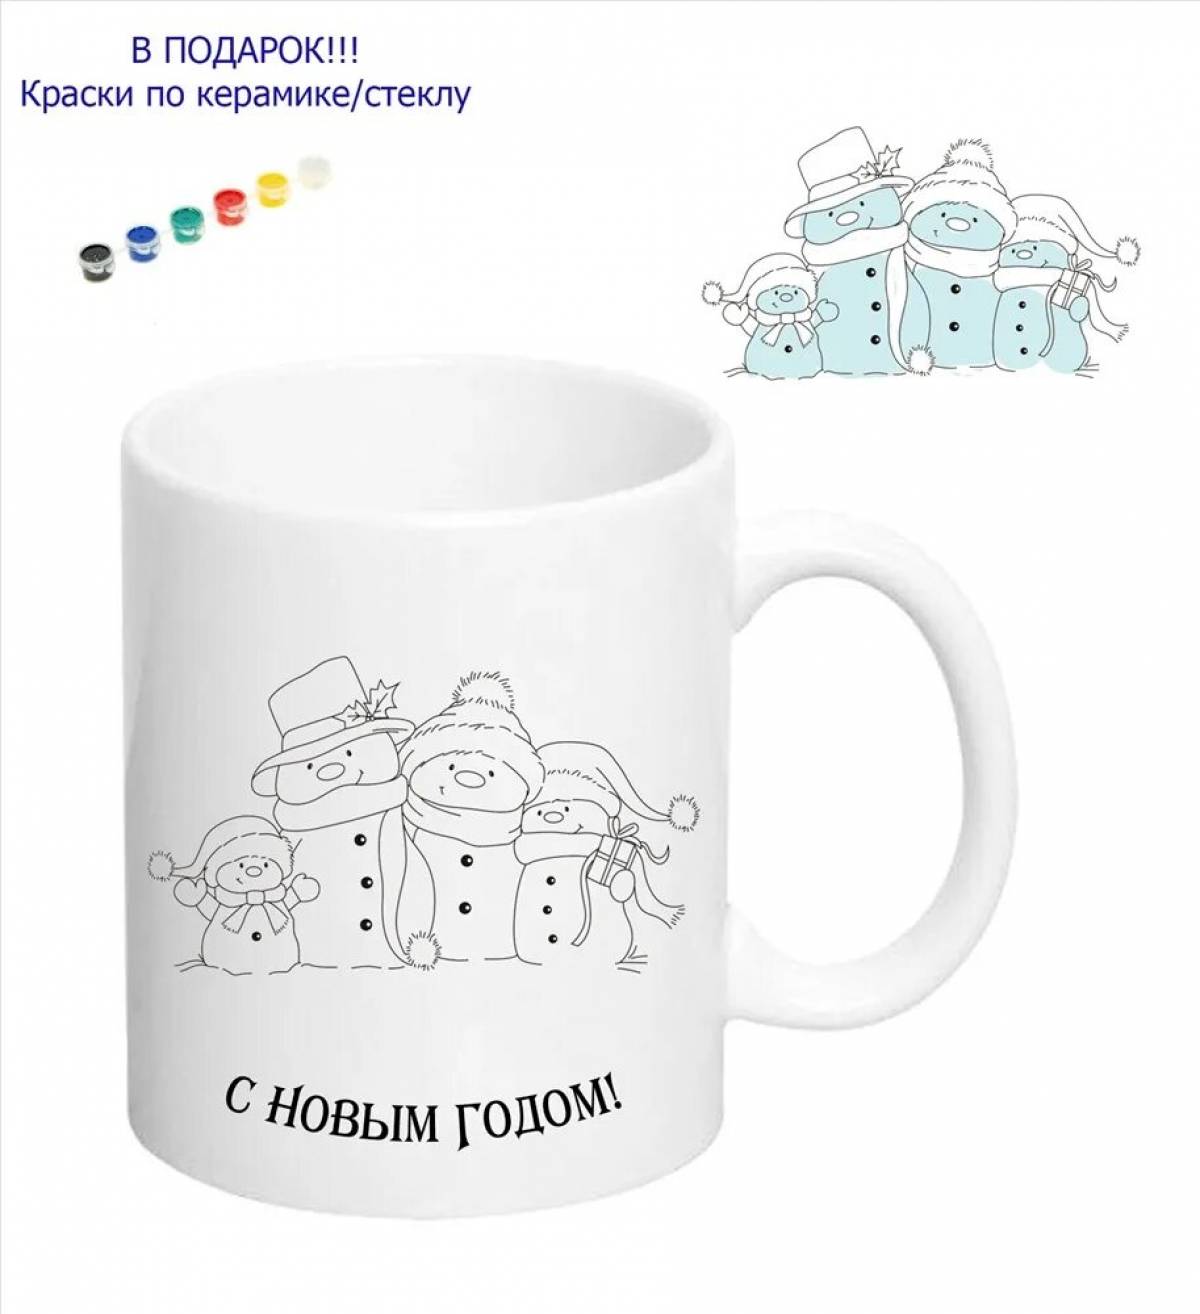 Страница раскраски jubilant mug для младенцев